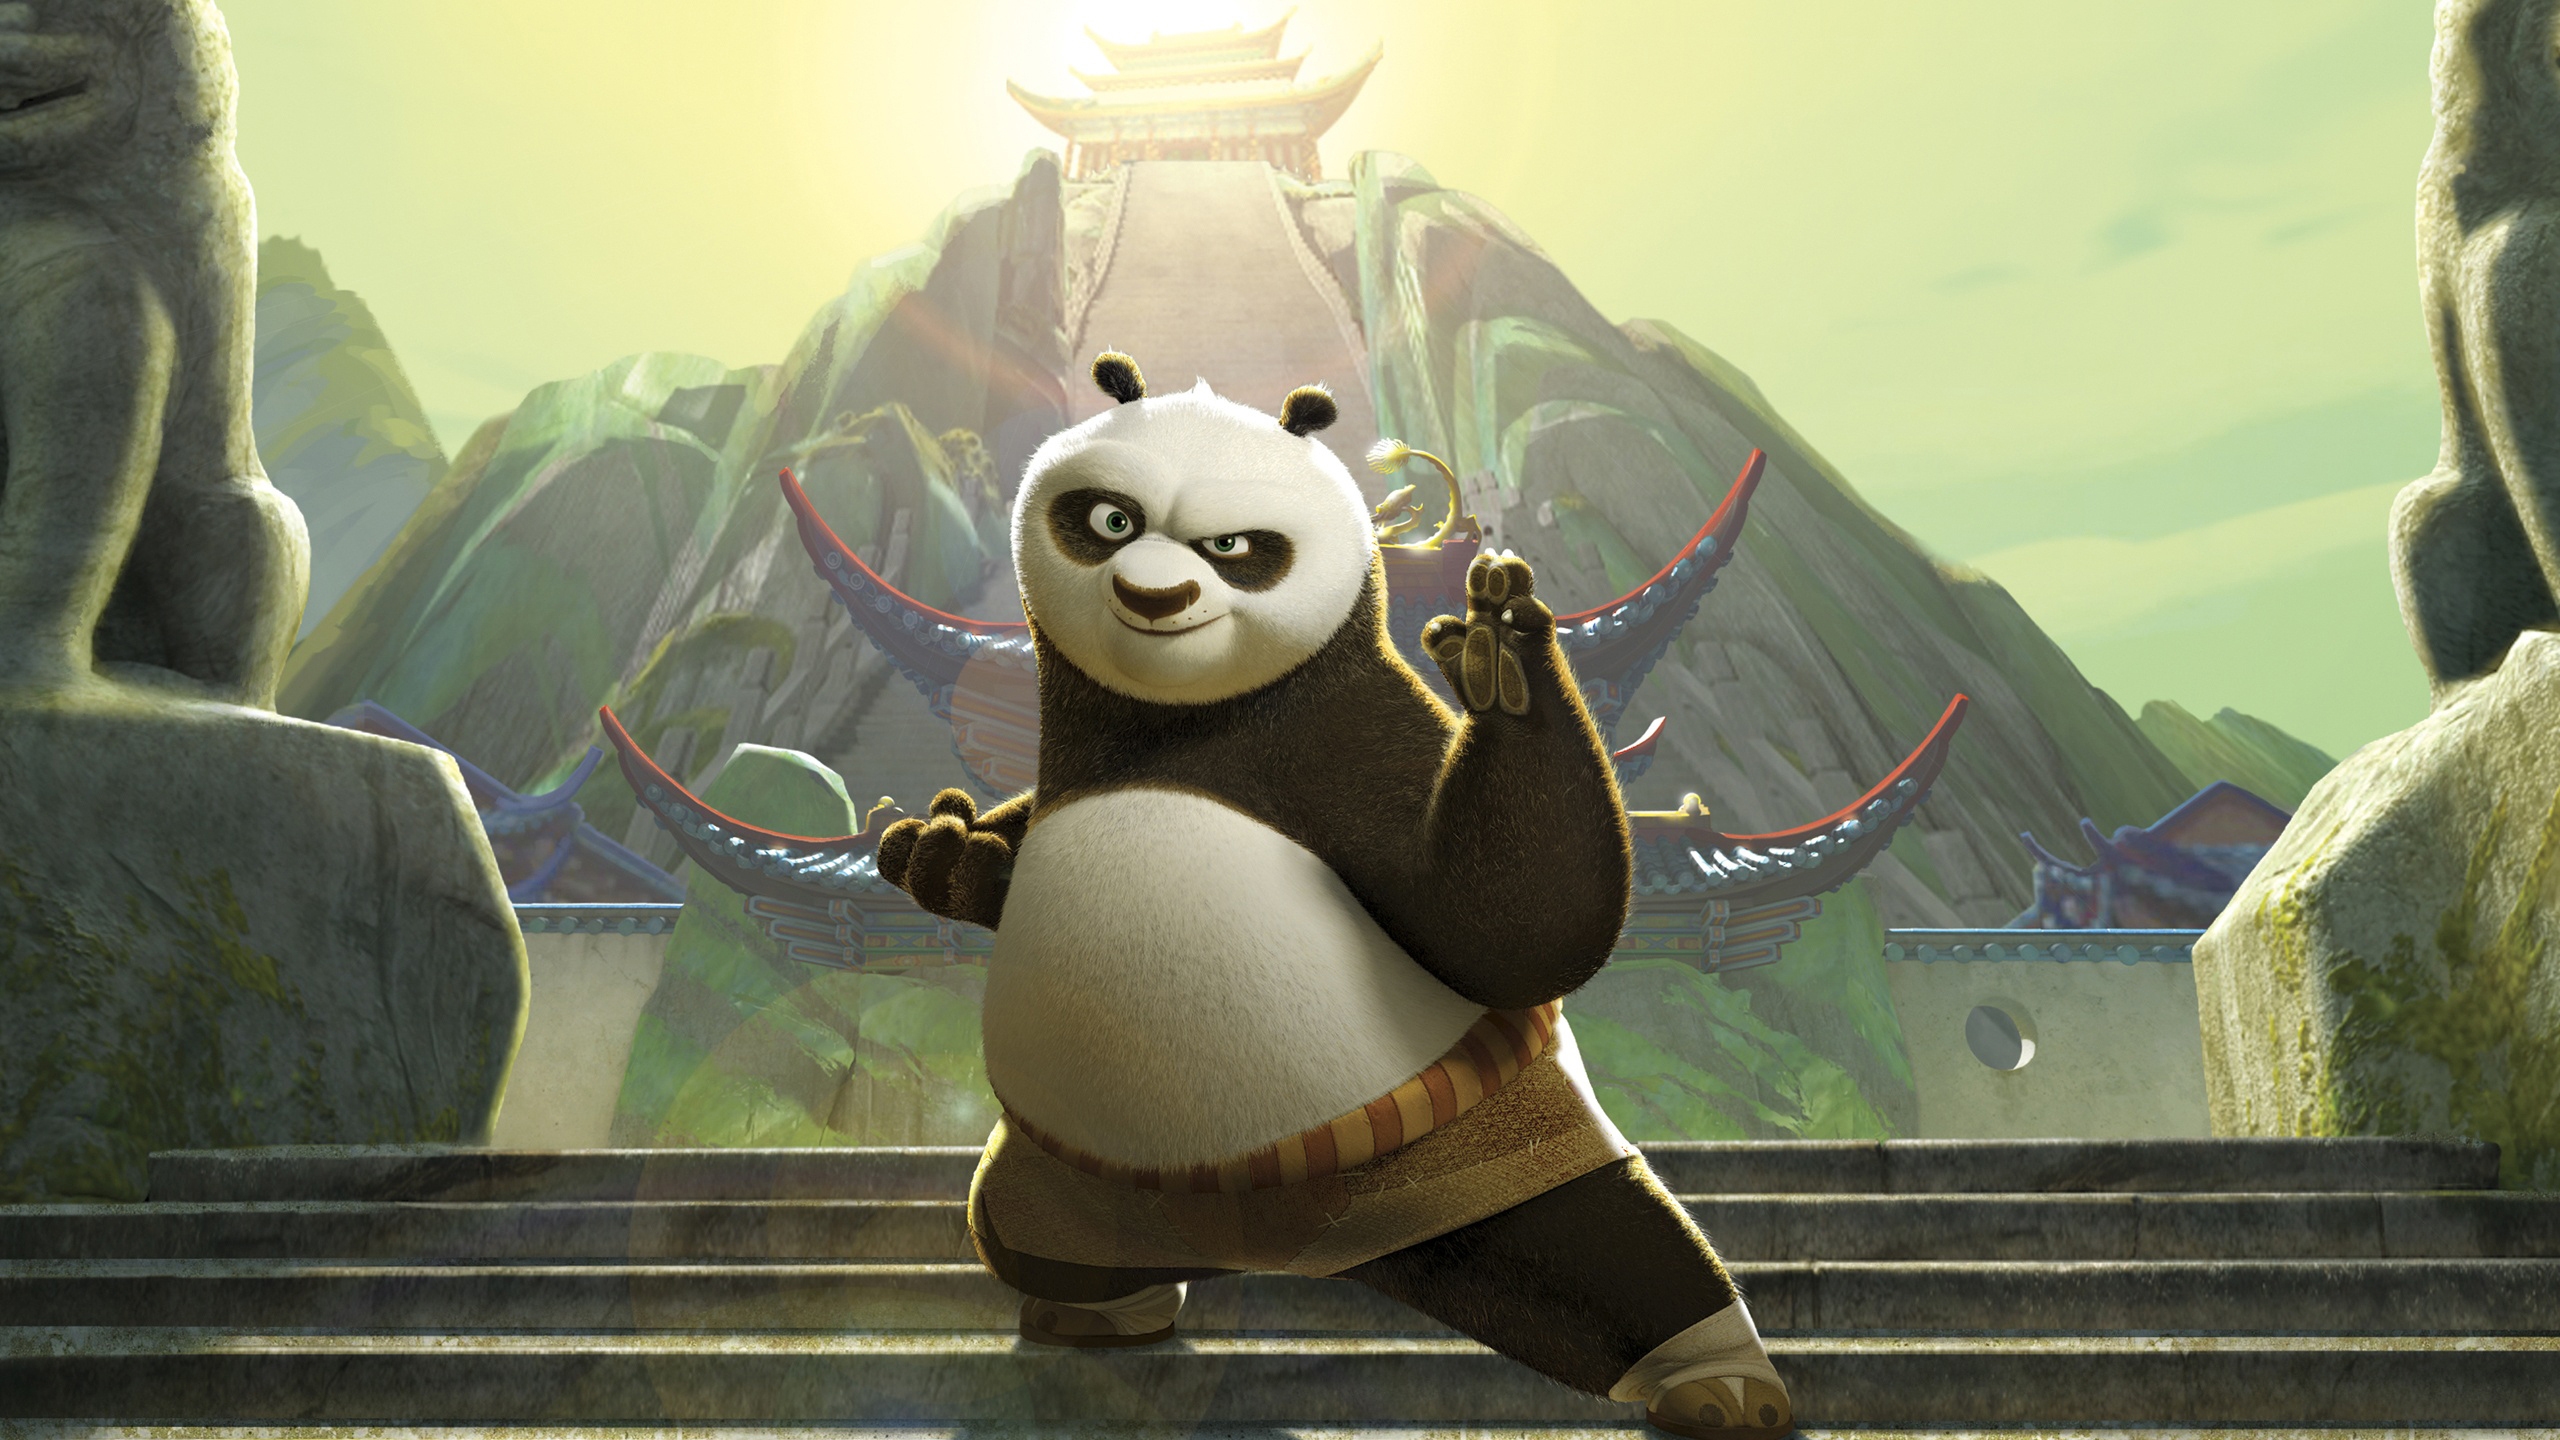 Kung Fu Panda 2 Poster for 2560x1440 HDTV resolution